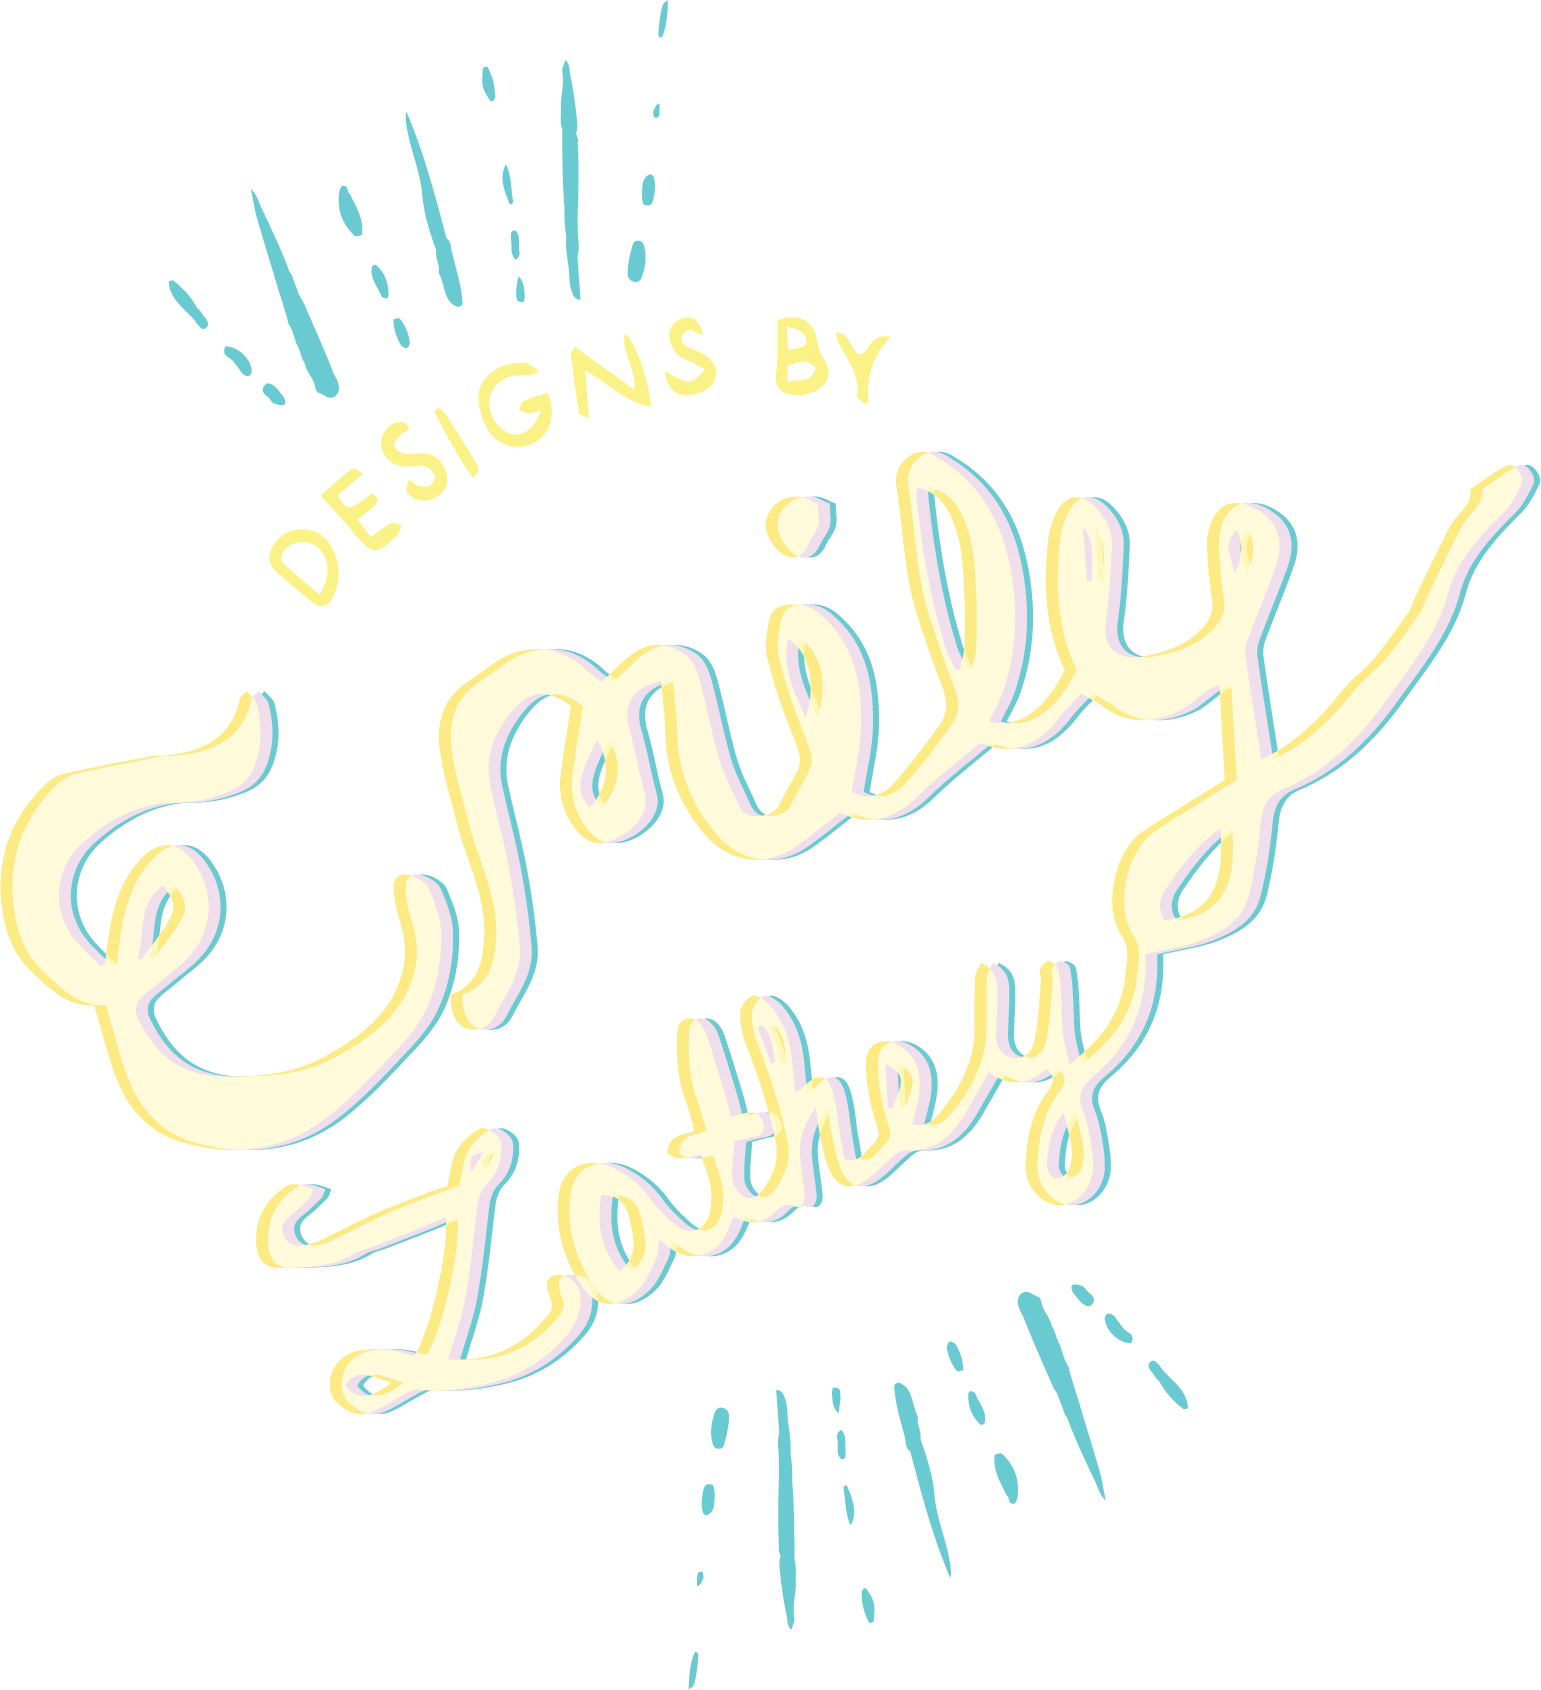 Emily Zathey's Portfolio